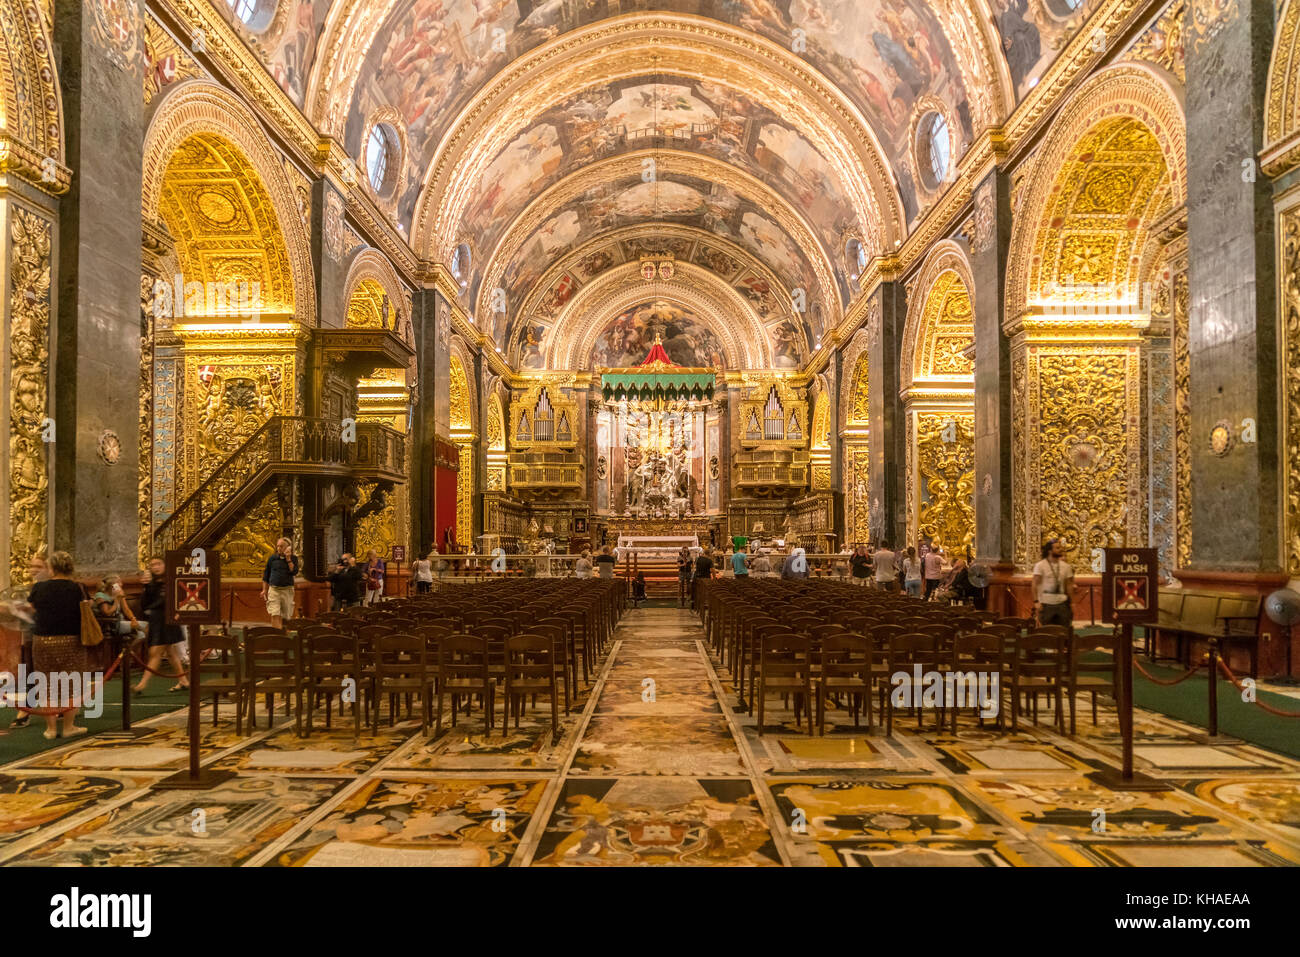 Magnificent interior of the Roman Catholic St. John's Co-Cathedral, Valletta, Malta Stock Photo